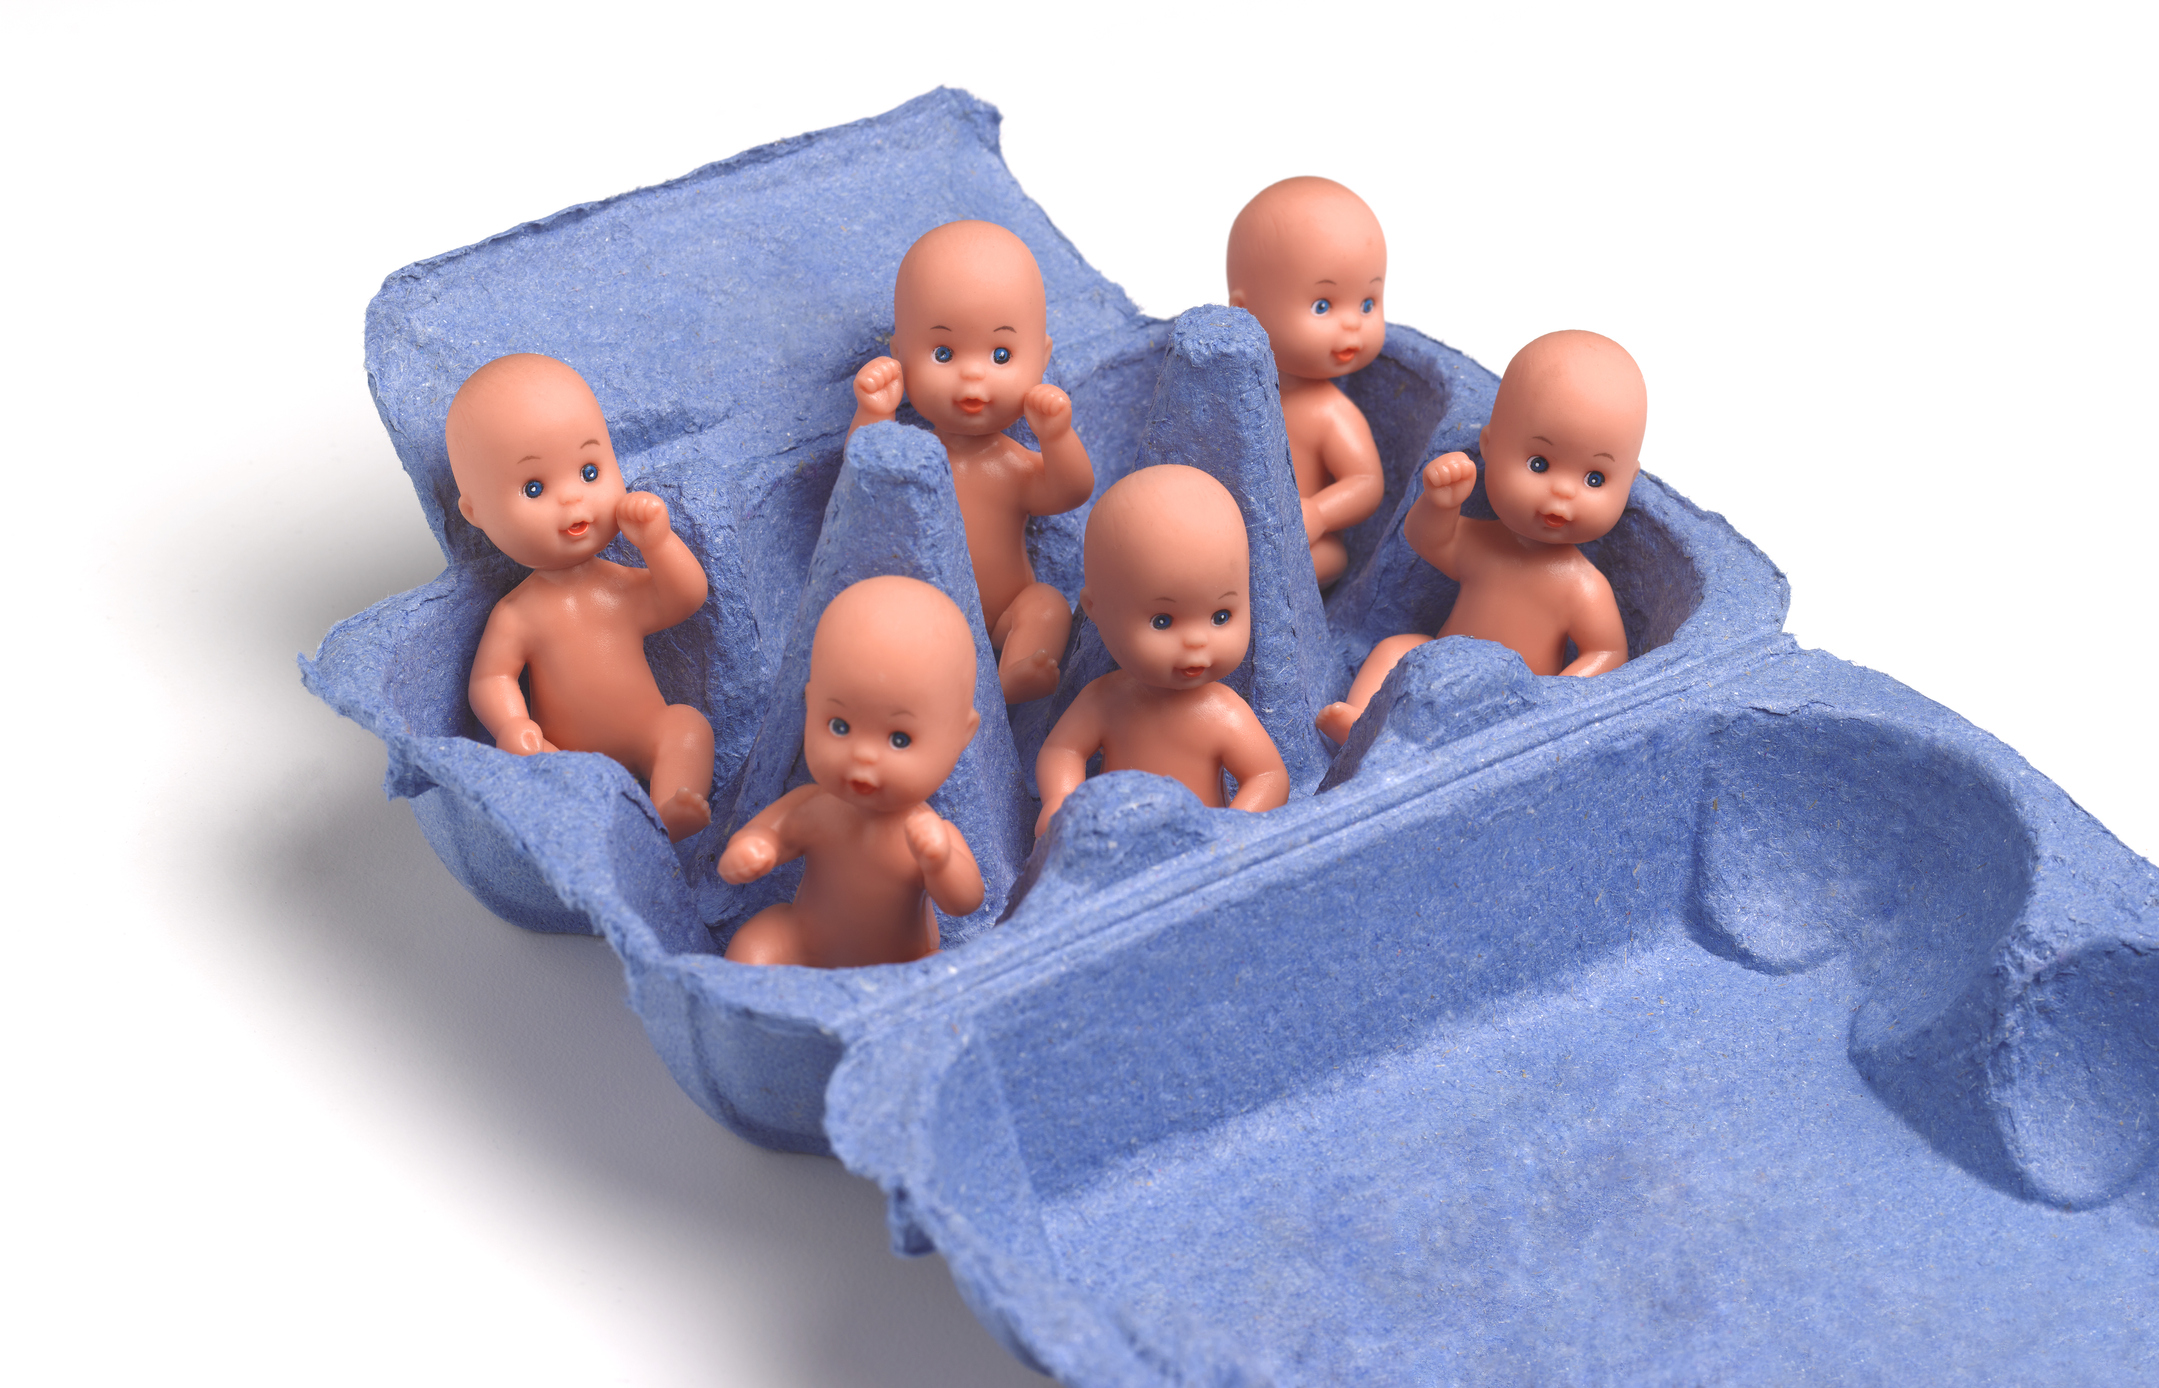 IVF created babies